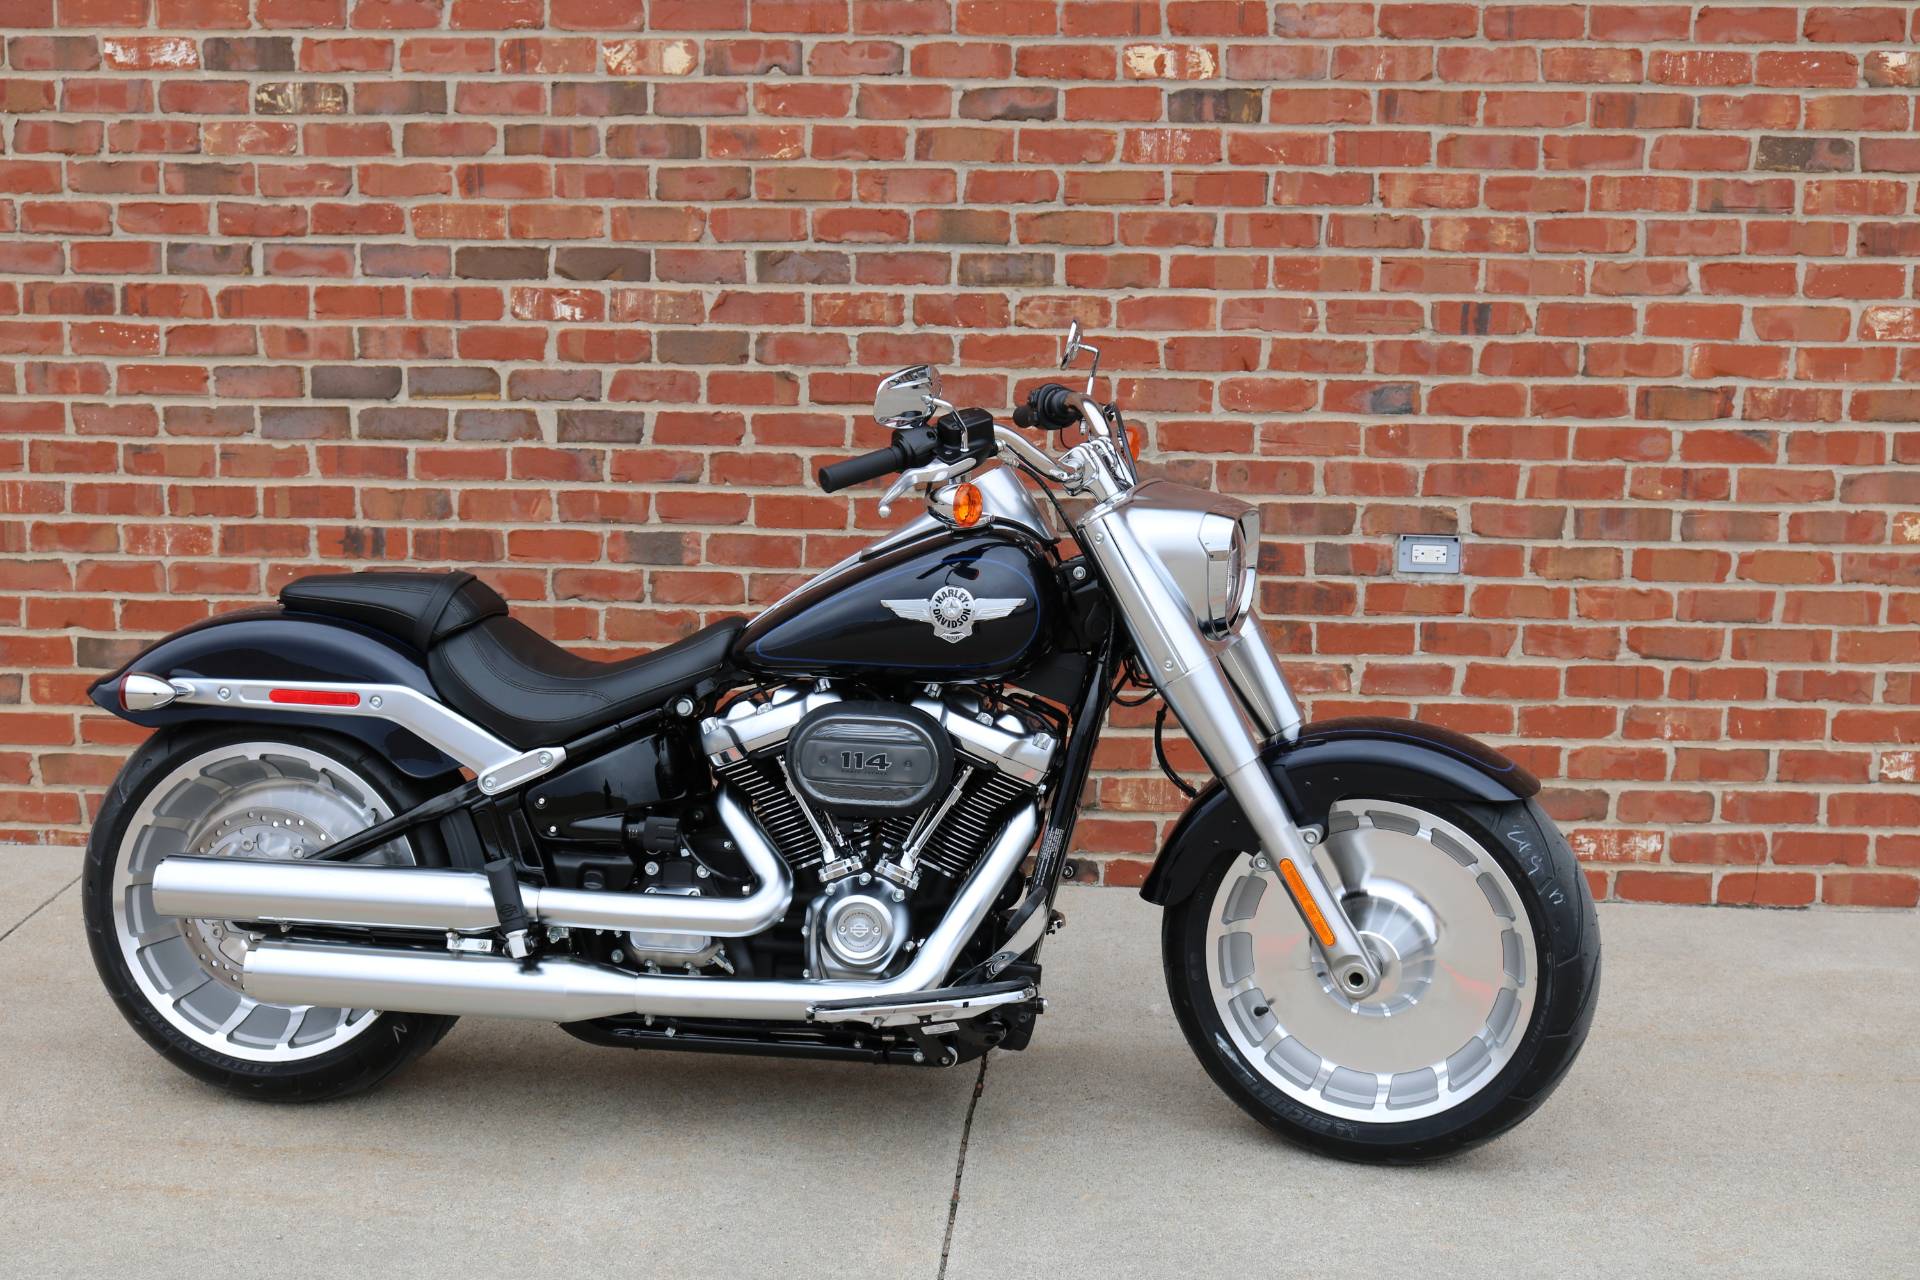 New 2019 Harley Davidson Fat Boy 114 Motorcycles in 